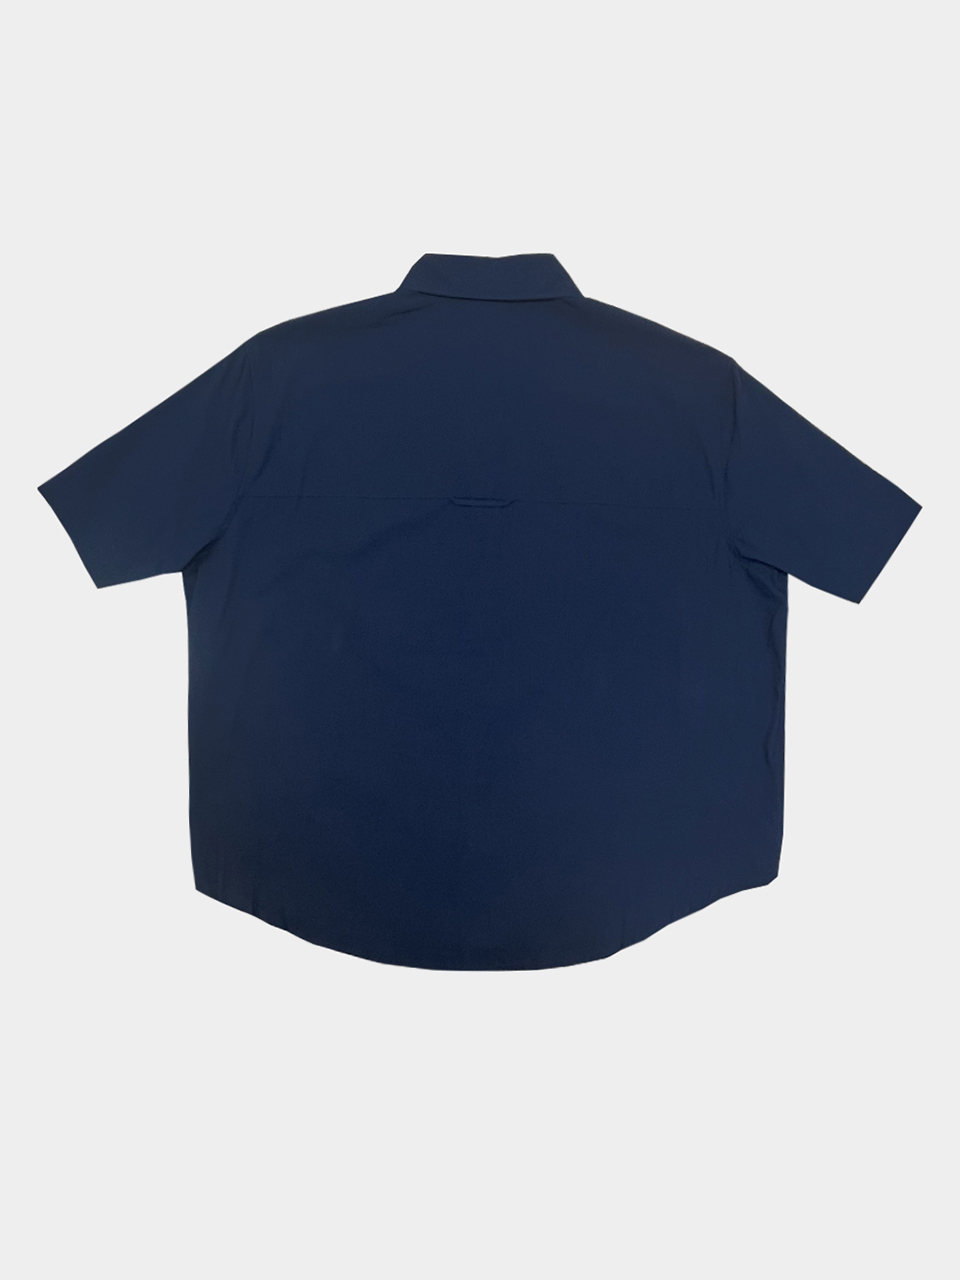 W Basic Half-Sleeved Shirt_Navy